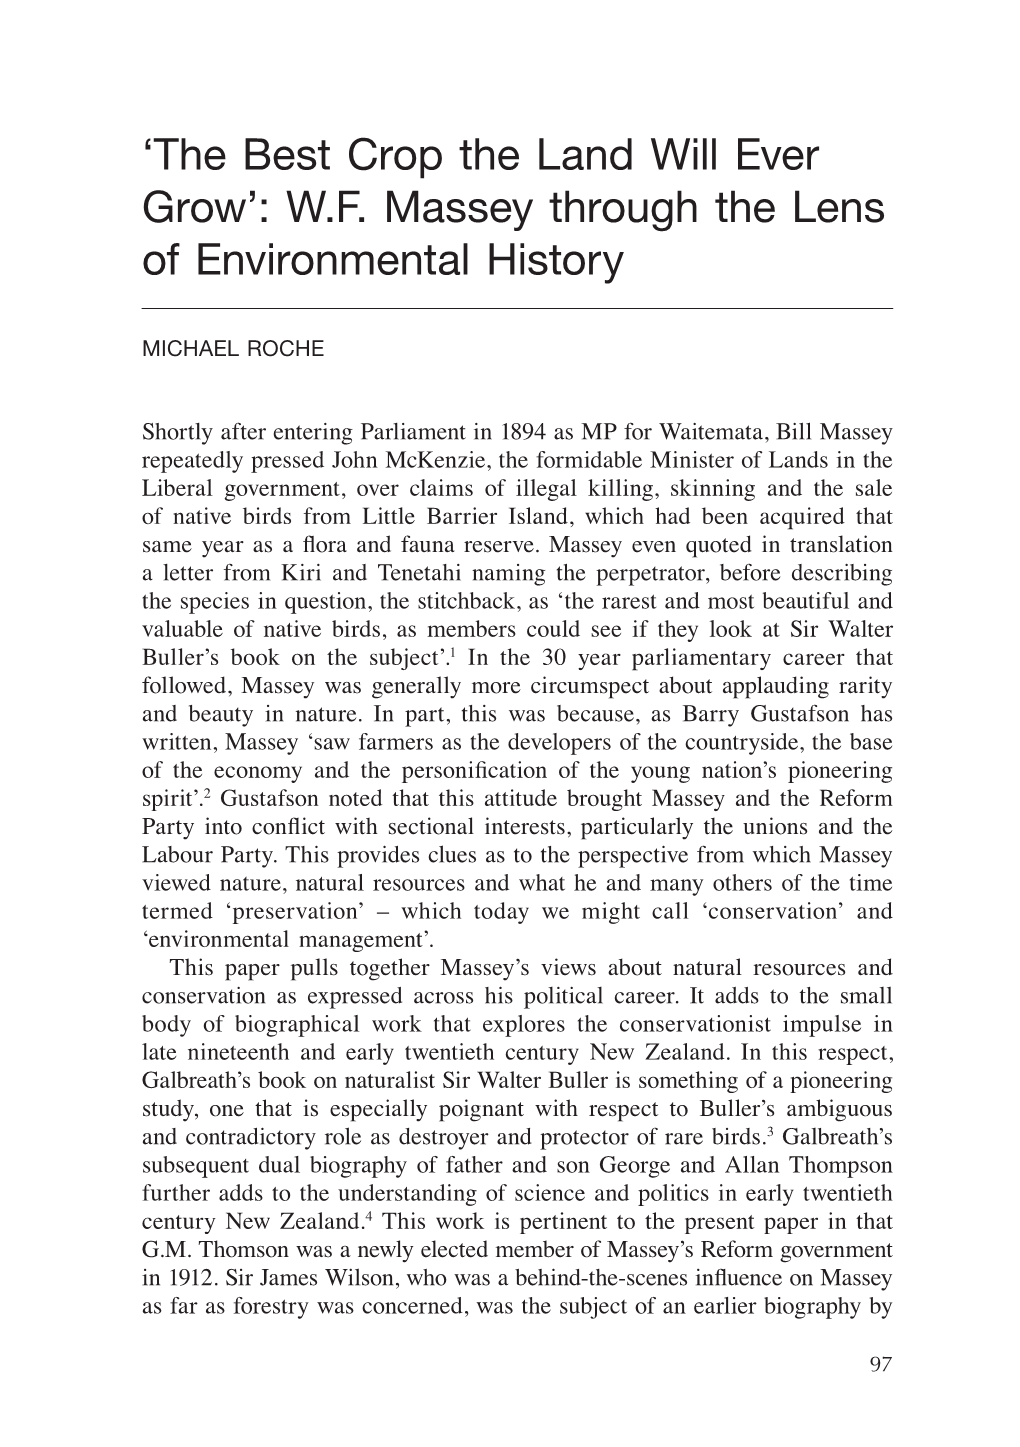 WF Massey Through the Lens of Environmental History